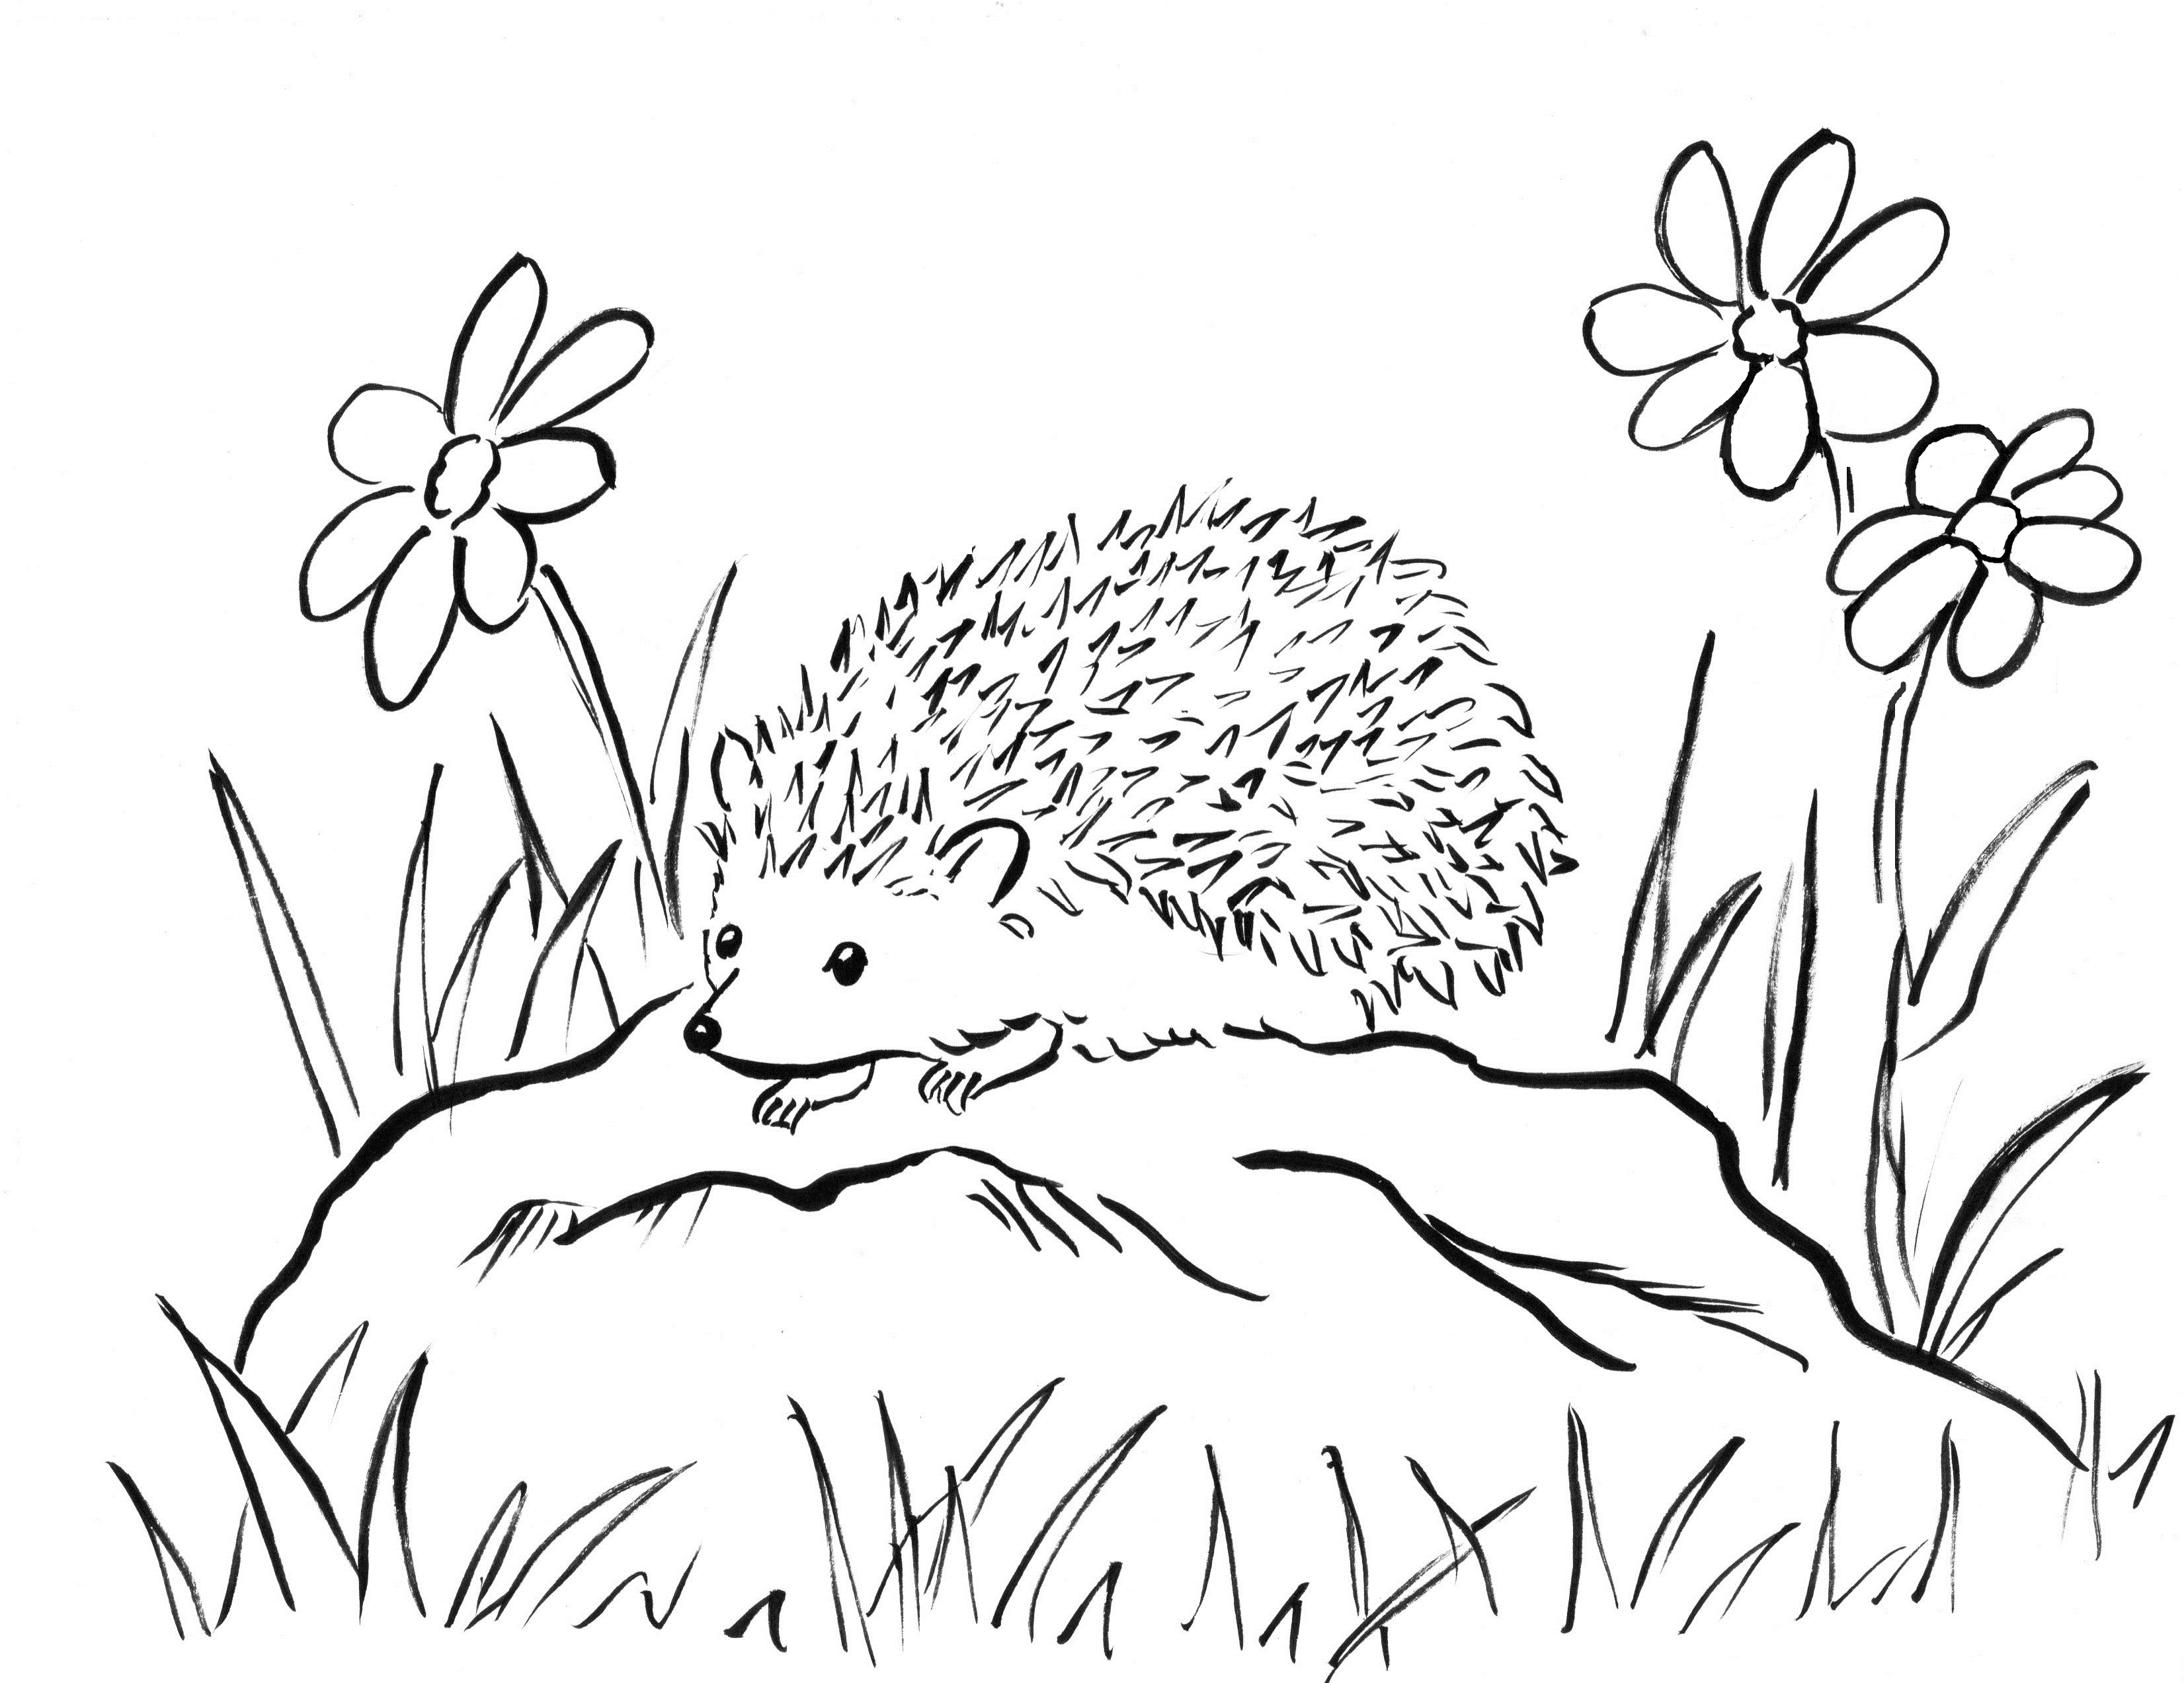 free hedgehog coloring pages printable